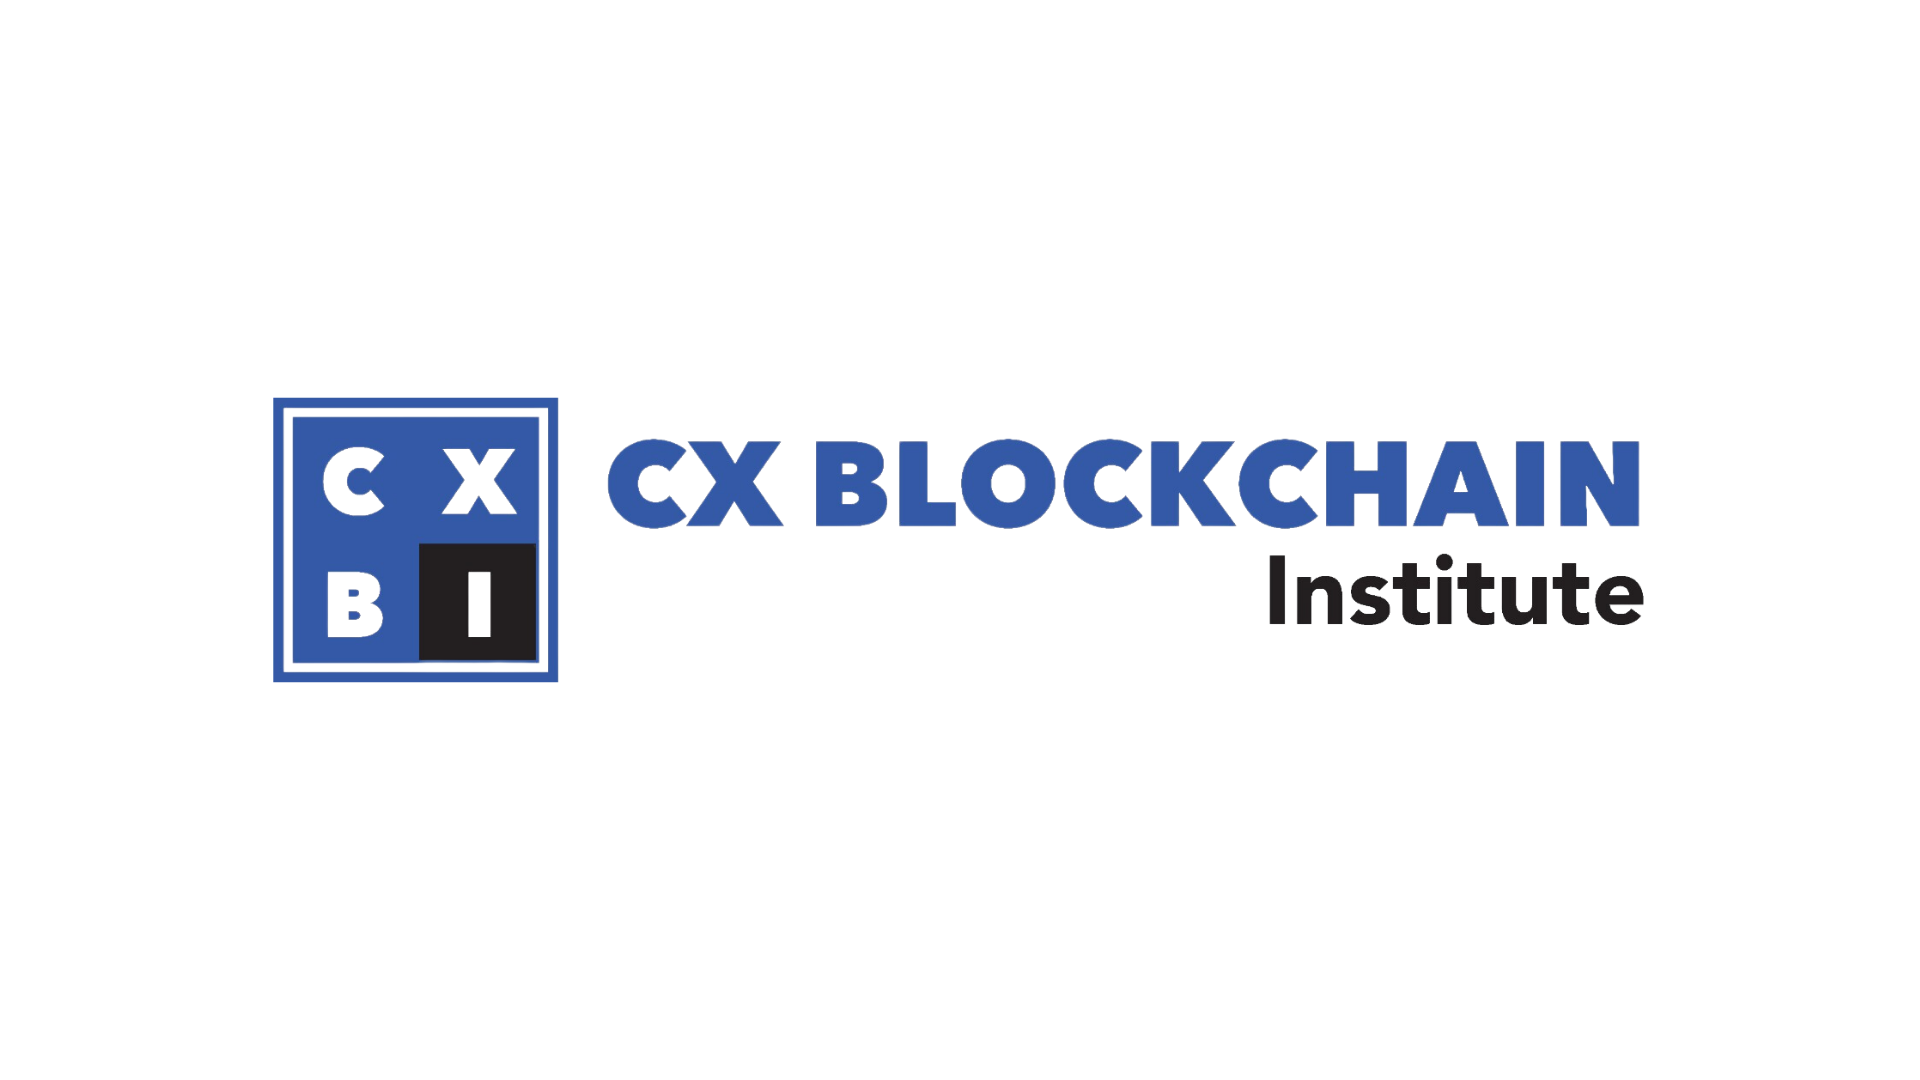 cx blockchain